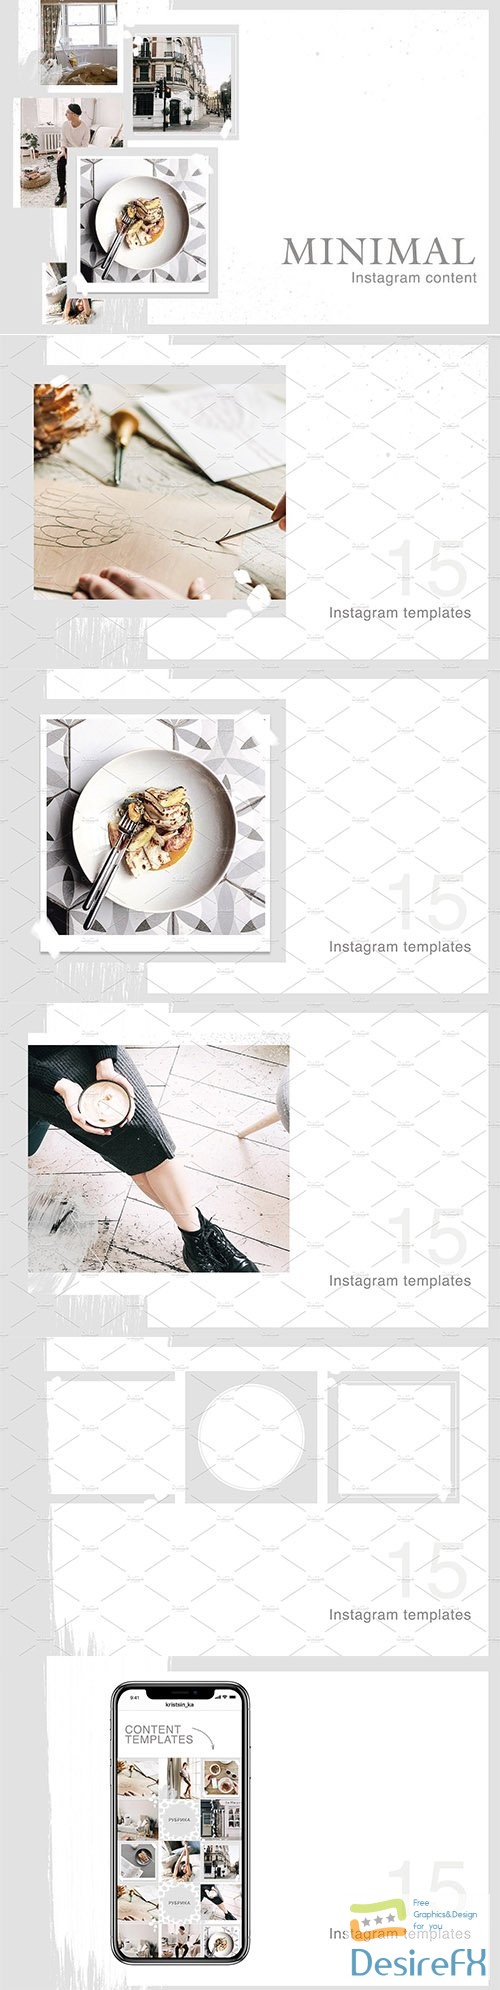 CreativeMarket - MINIMAL 15 instagram templates 2369646